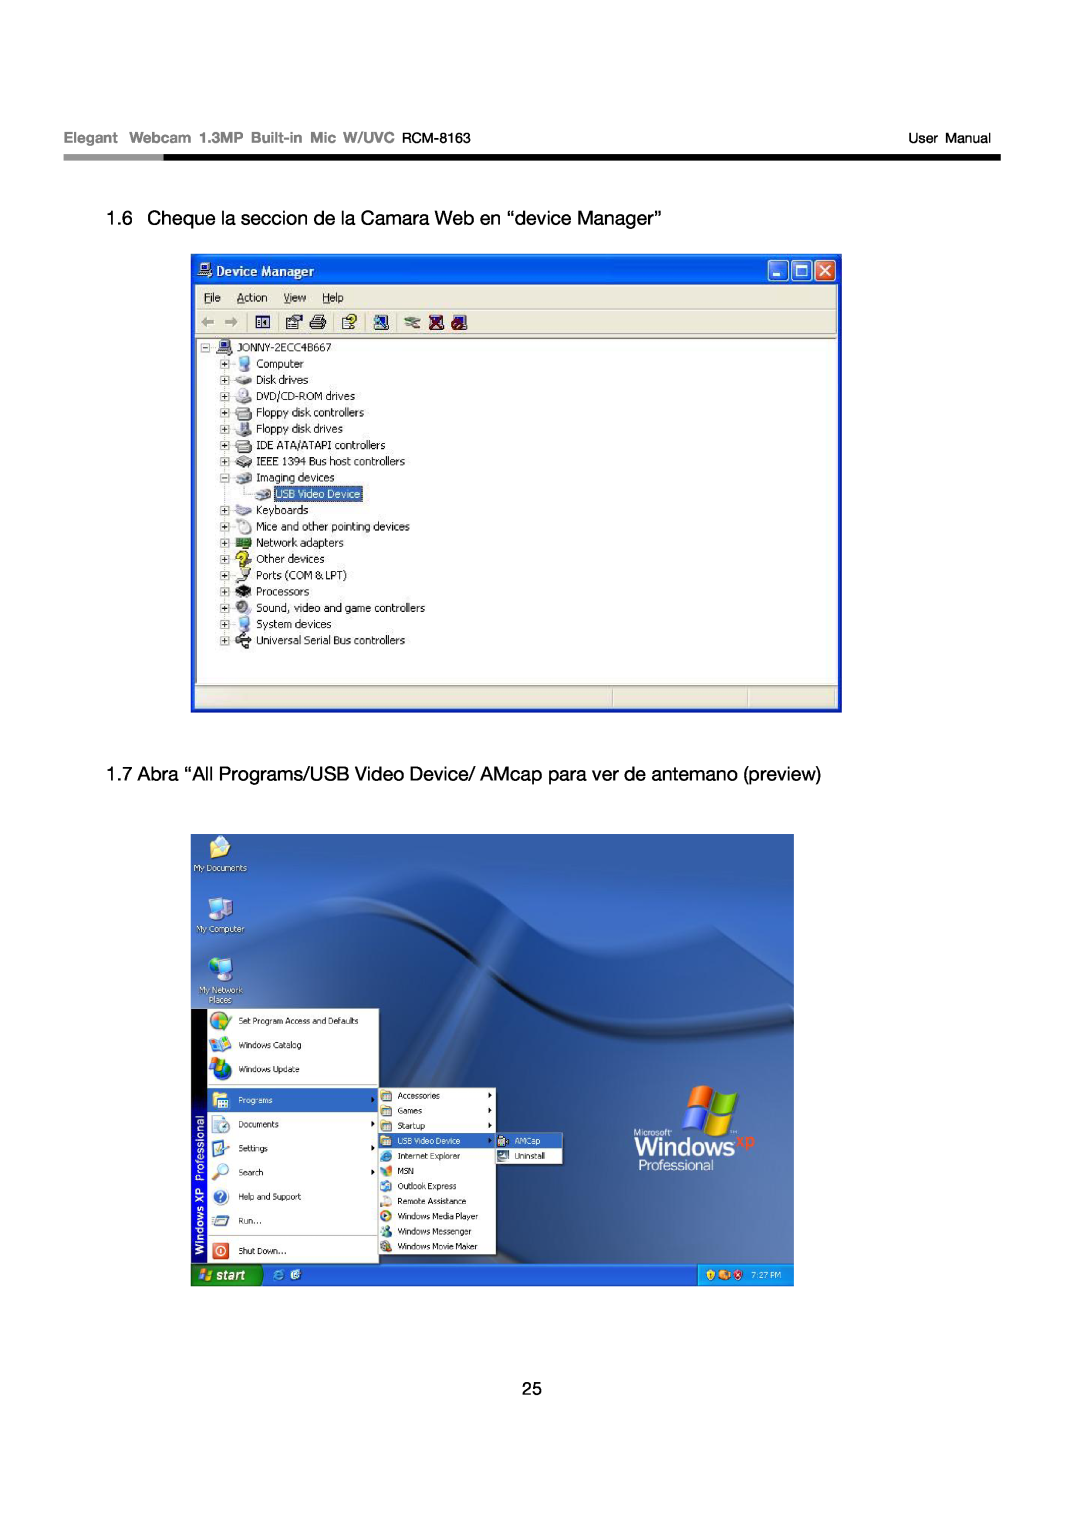 Rosewill Cheque la seccion de la Camara Web en “device Manager”, Elegant Webcam 1.3MP Built-in Mic W/UVC RCM-8163 